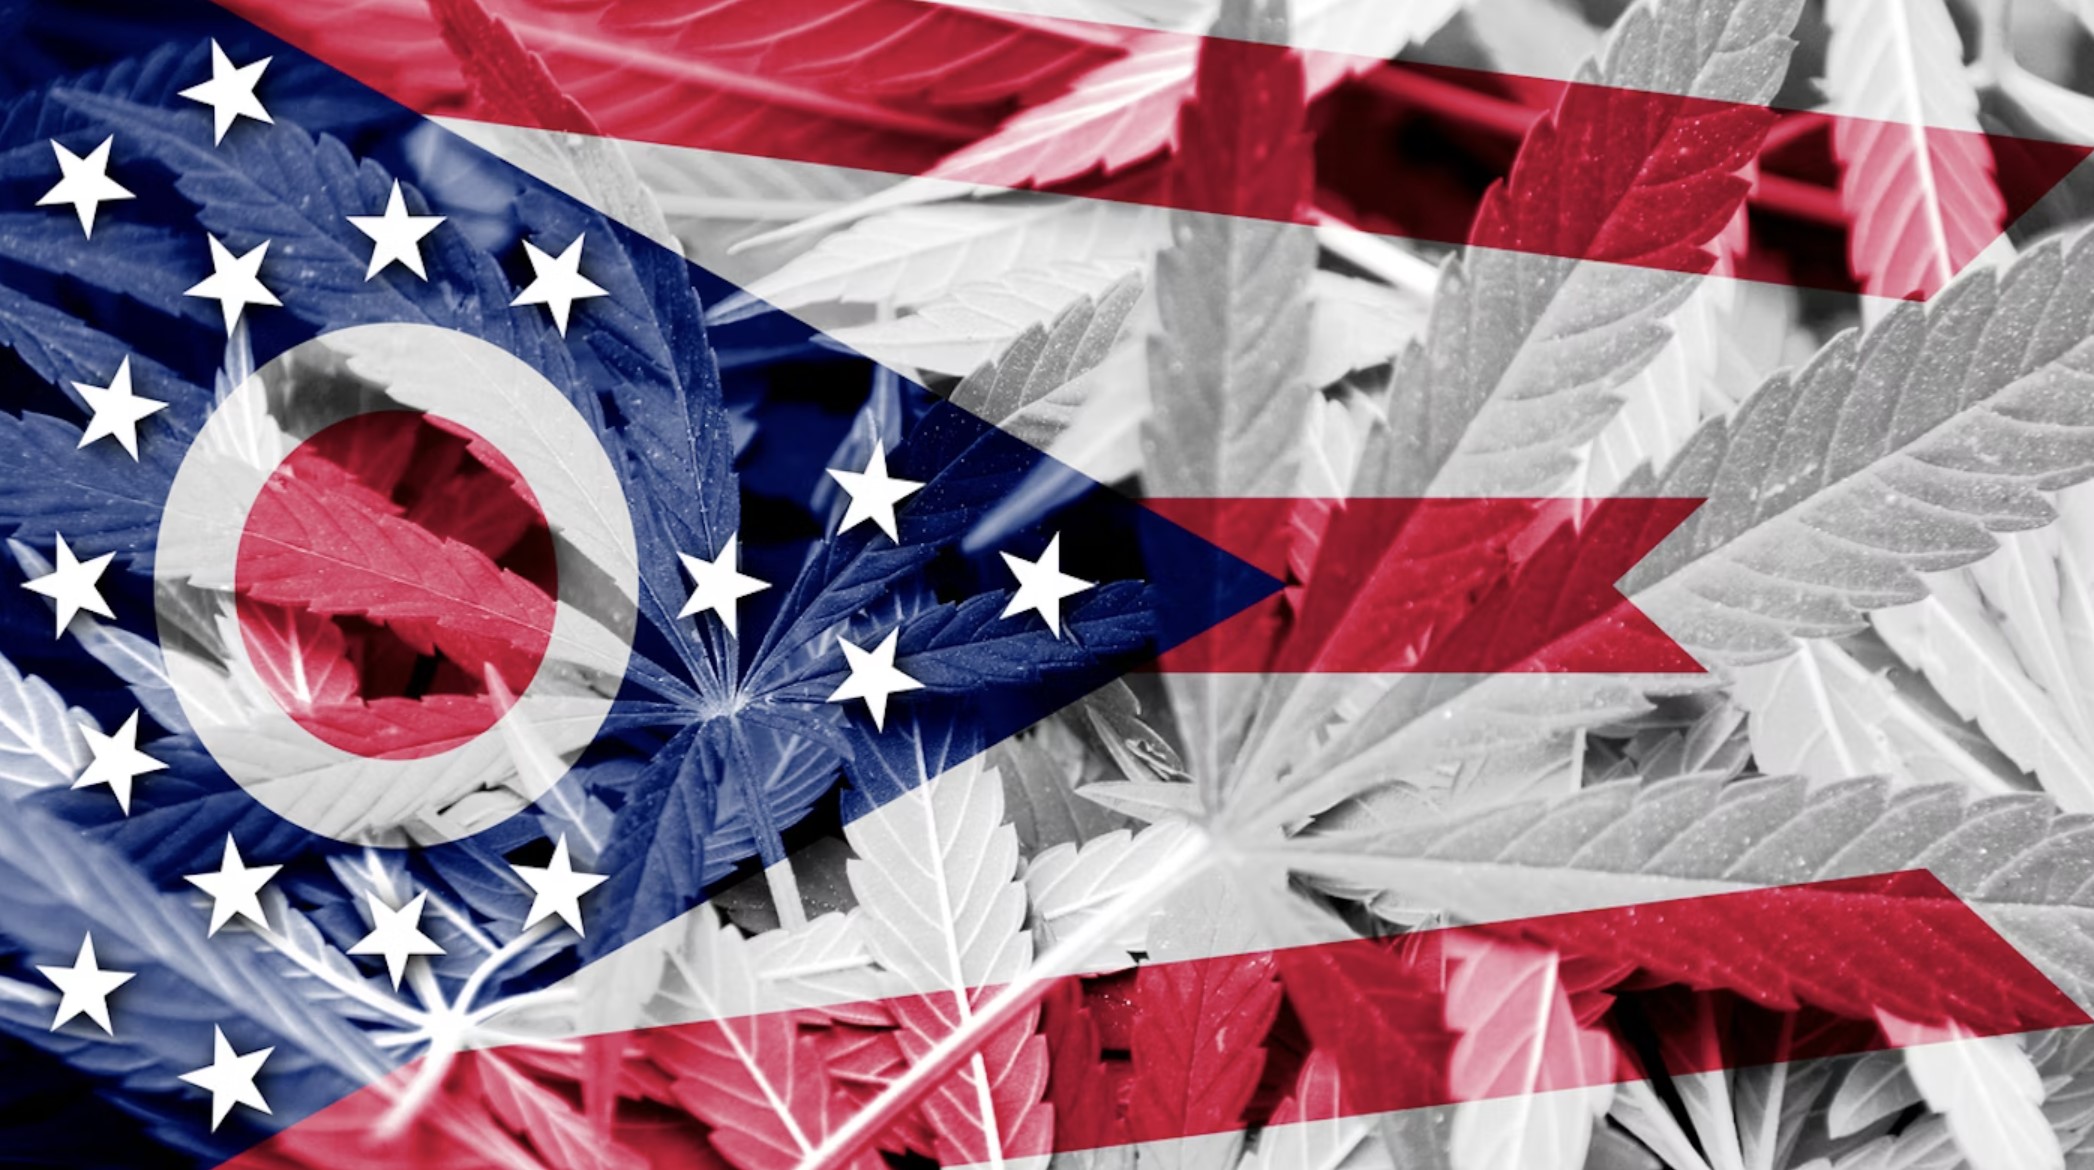 Ohio state flag with weed leaf overlay.